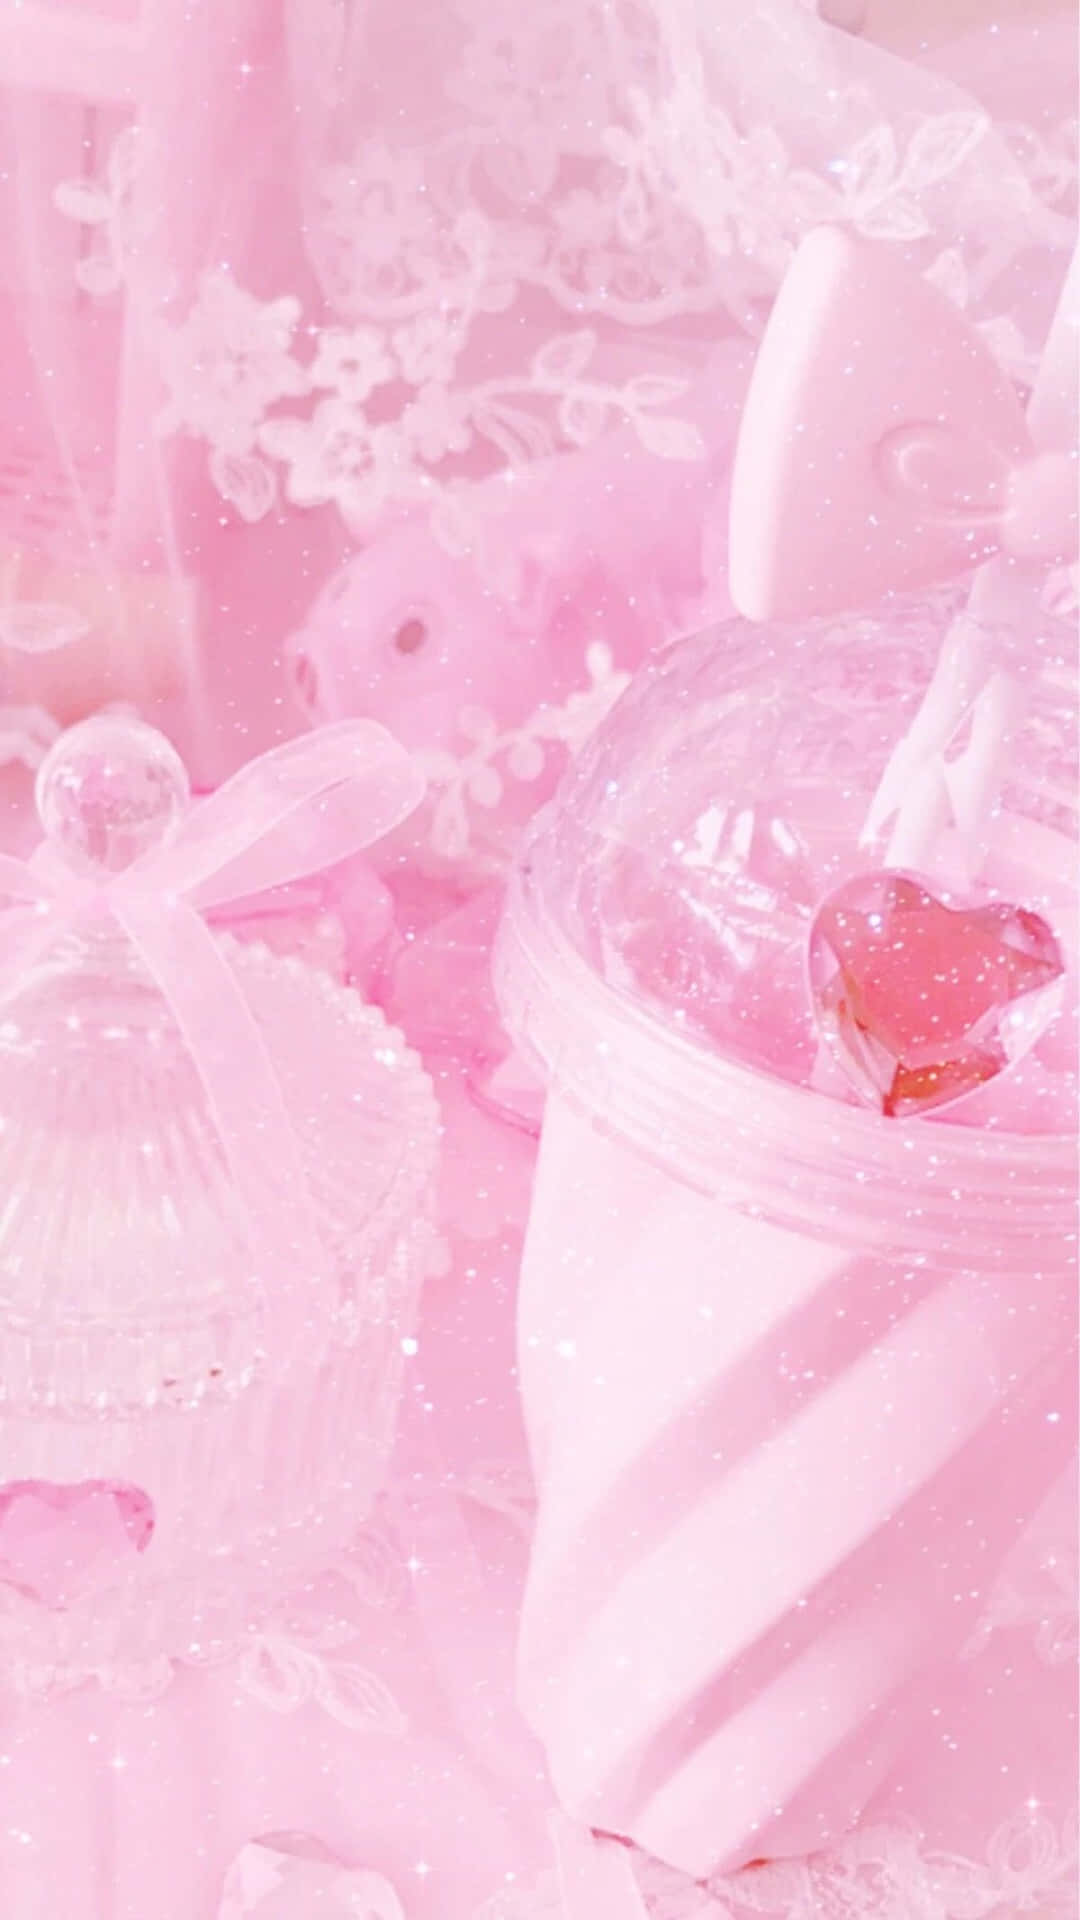 Soft, Calming Tones Of Pink Evoke A Sense Of Joy.